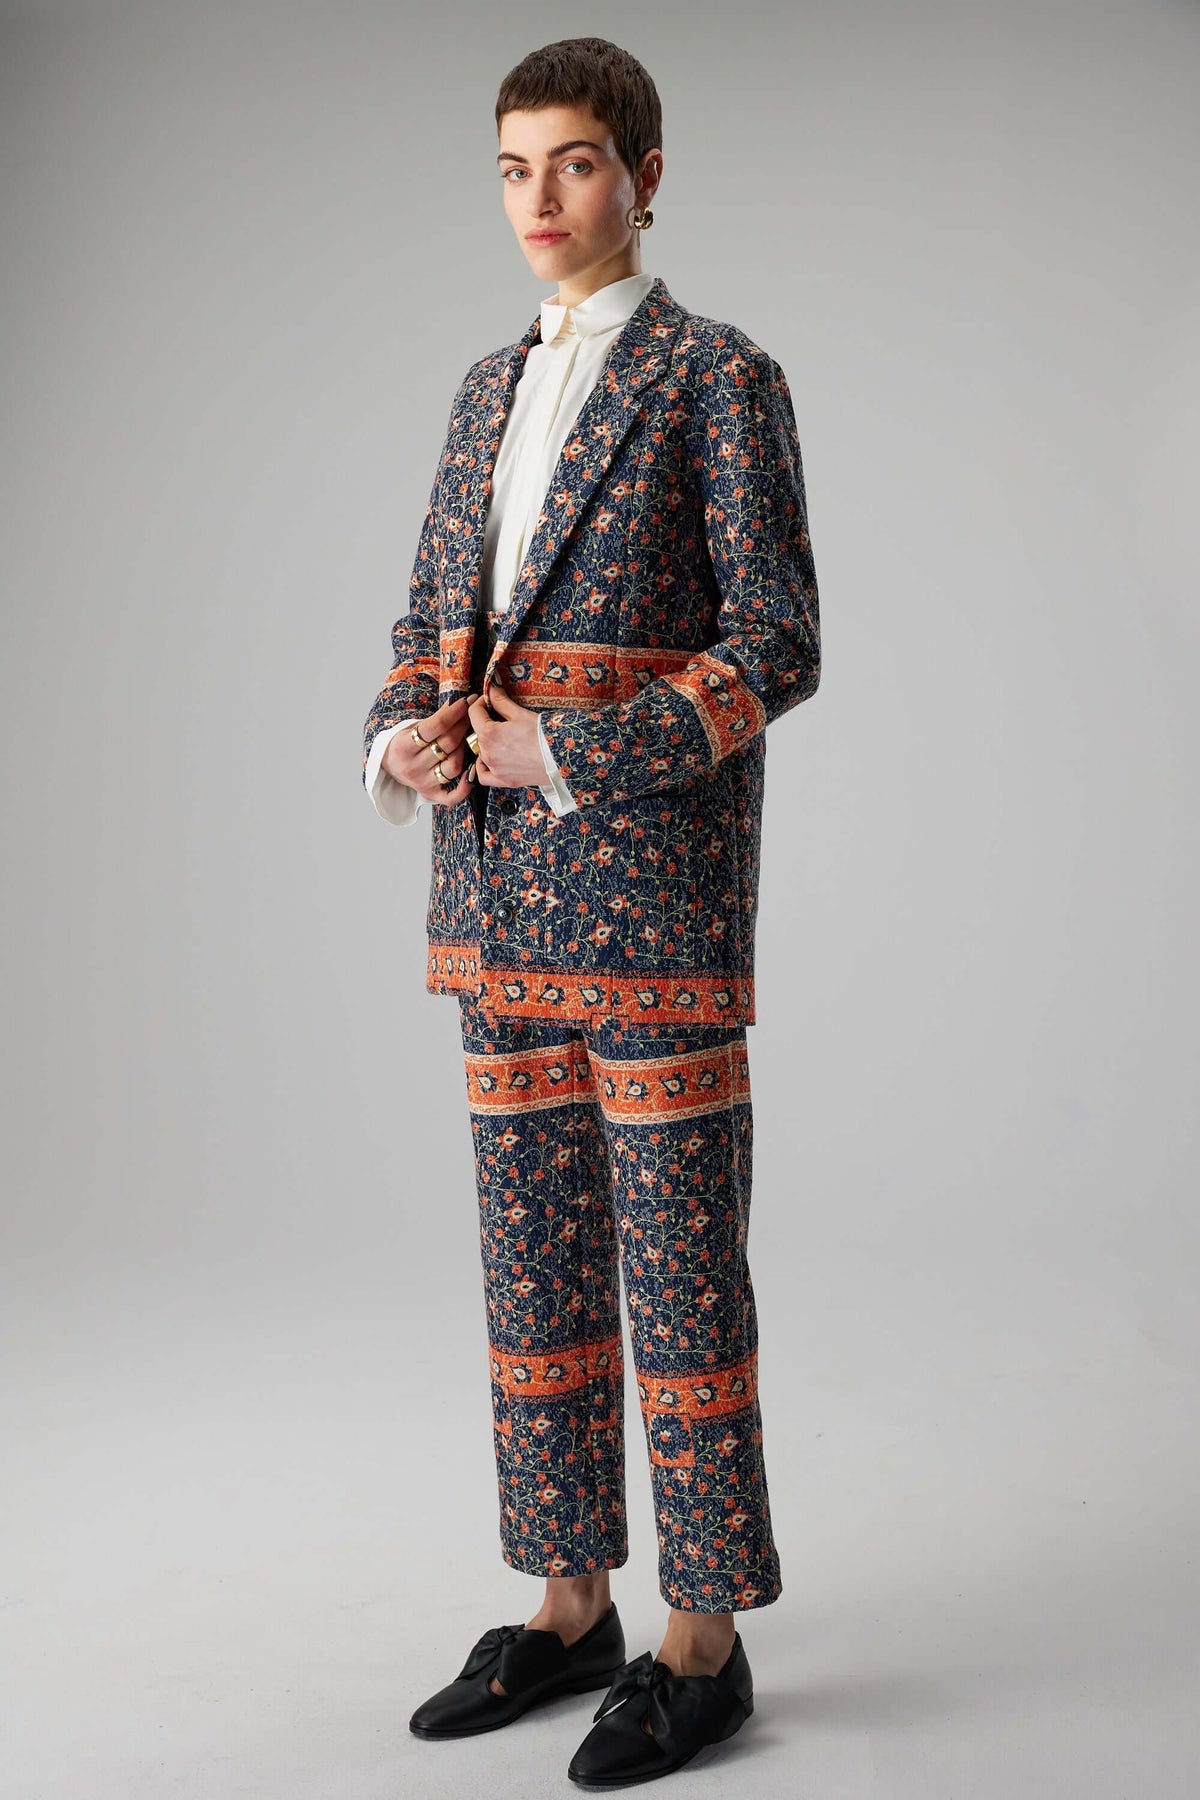 Sonny Crockett blazer in Bourbon fabric